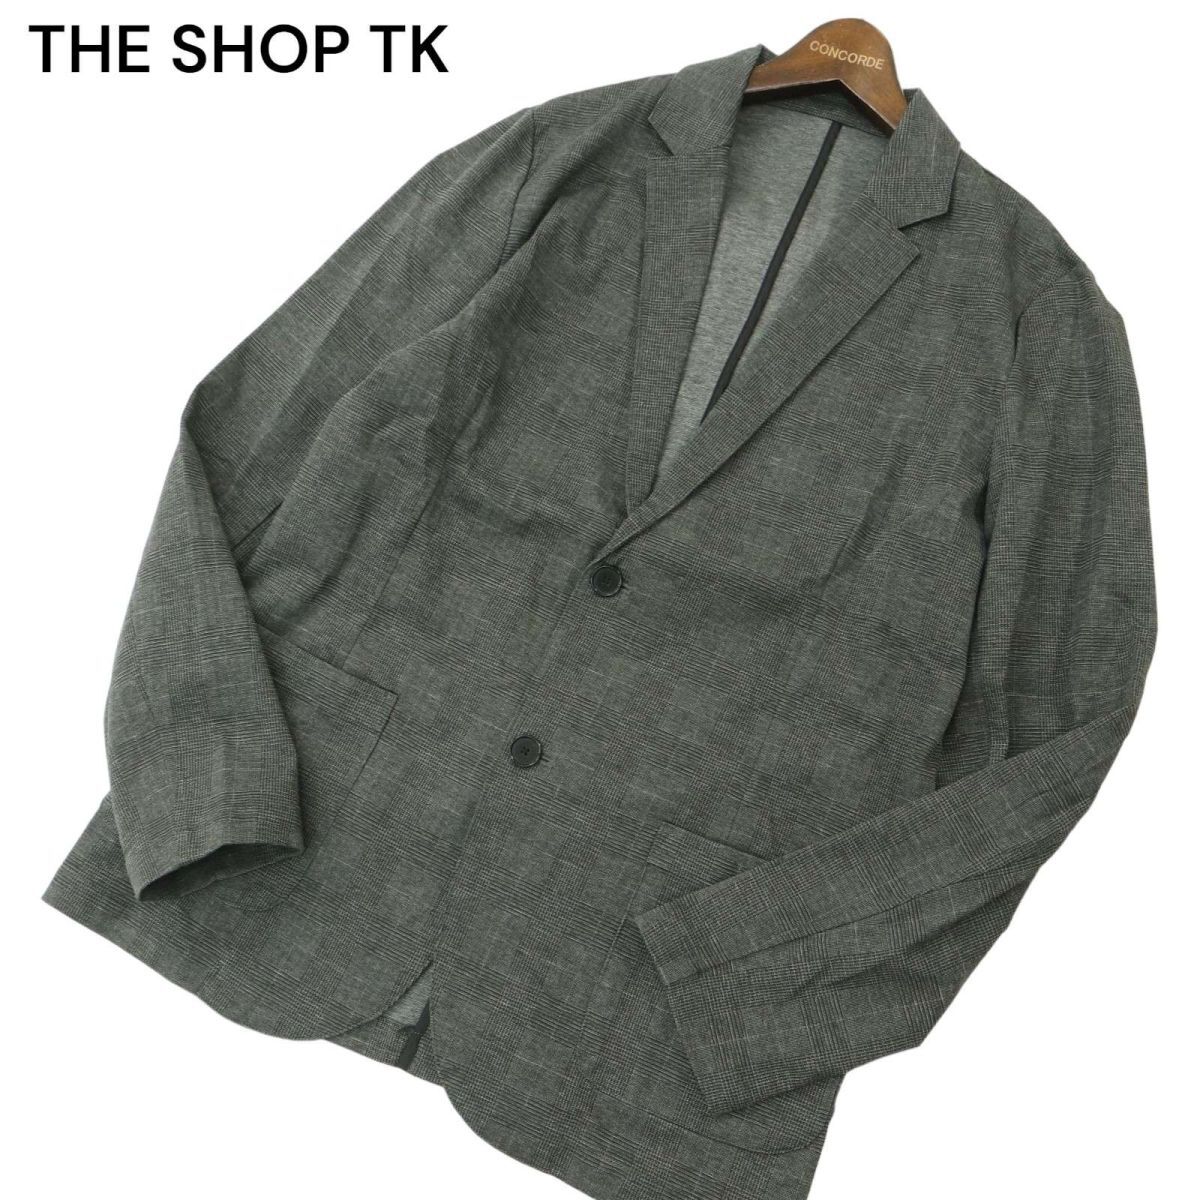 THE SHOP TK Takeo Kikuchi весна лето Glenn проверка * штемпель ja-ti gun tailored jacket Sz.XL мужской пепел большой A4T02518_3#M